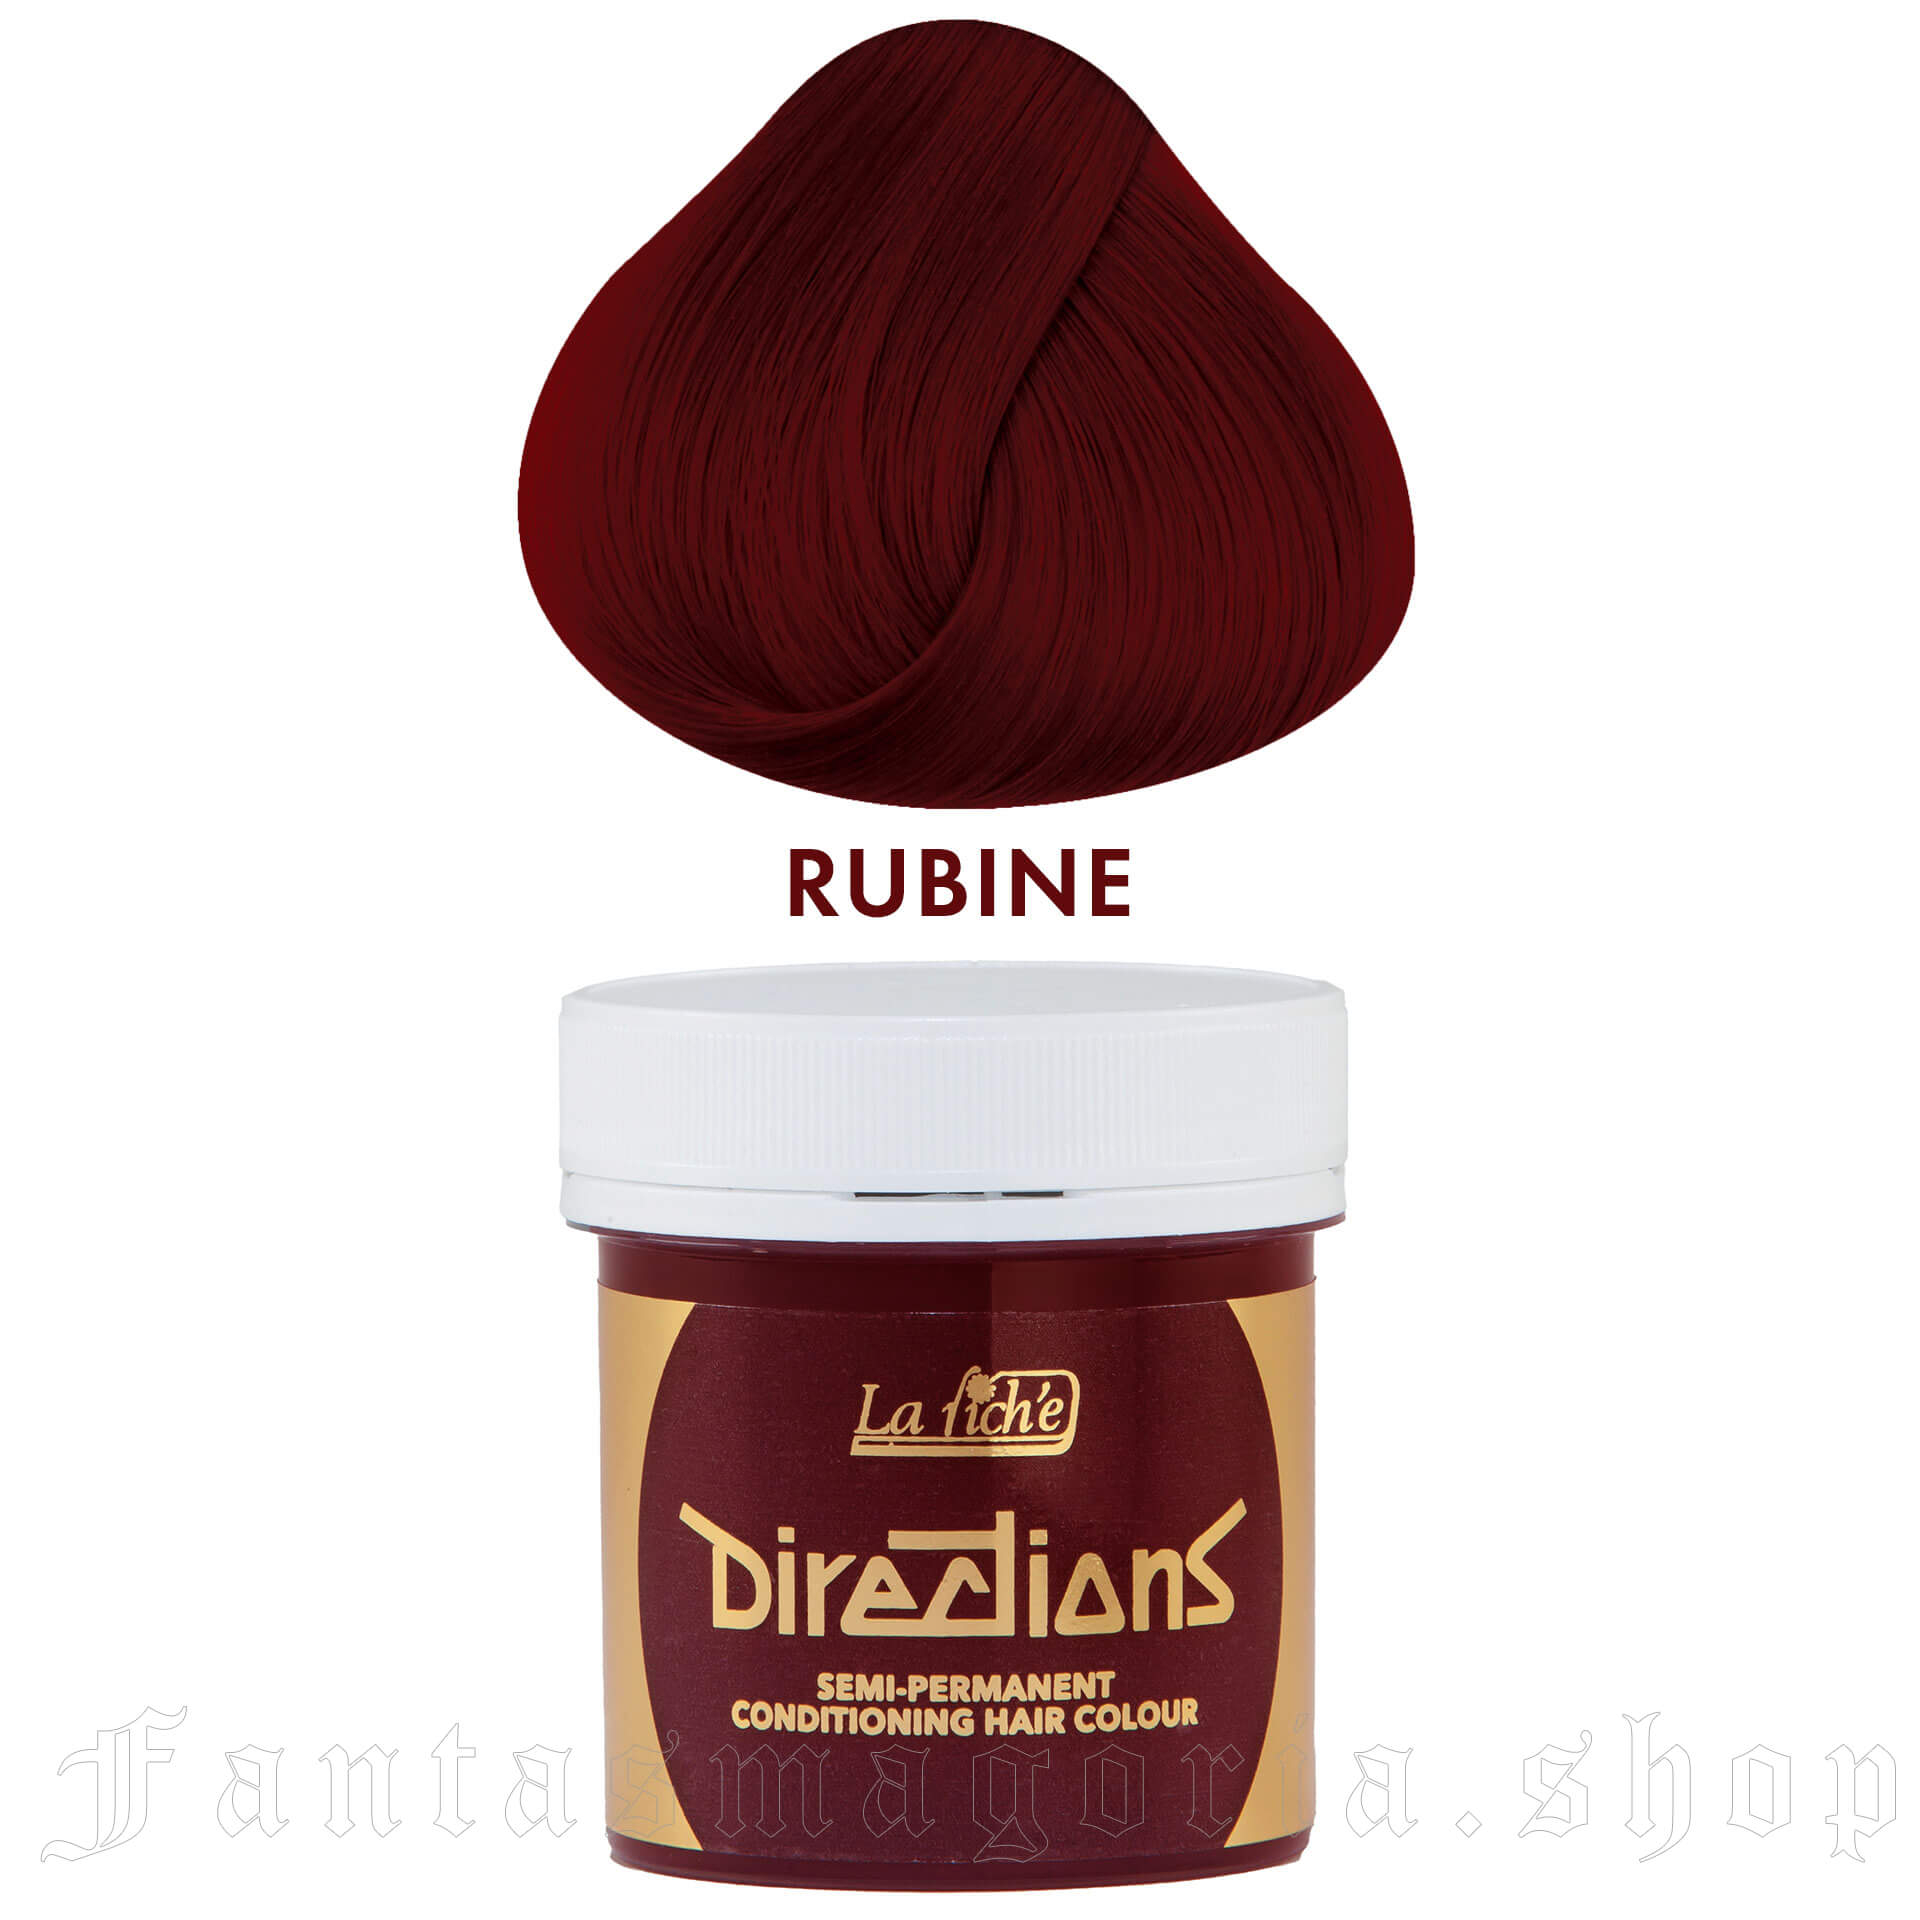 Rubine Hair Coloring Balsam - Directions - DIRECTIONS/RUBINE 1